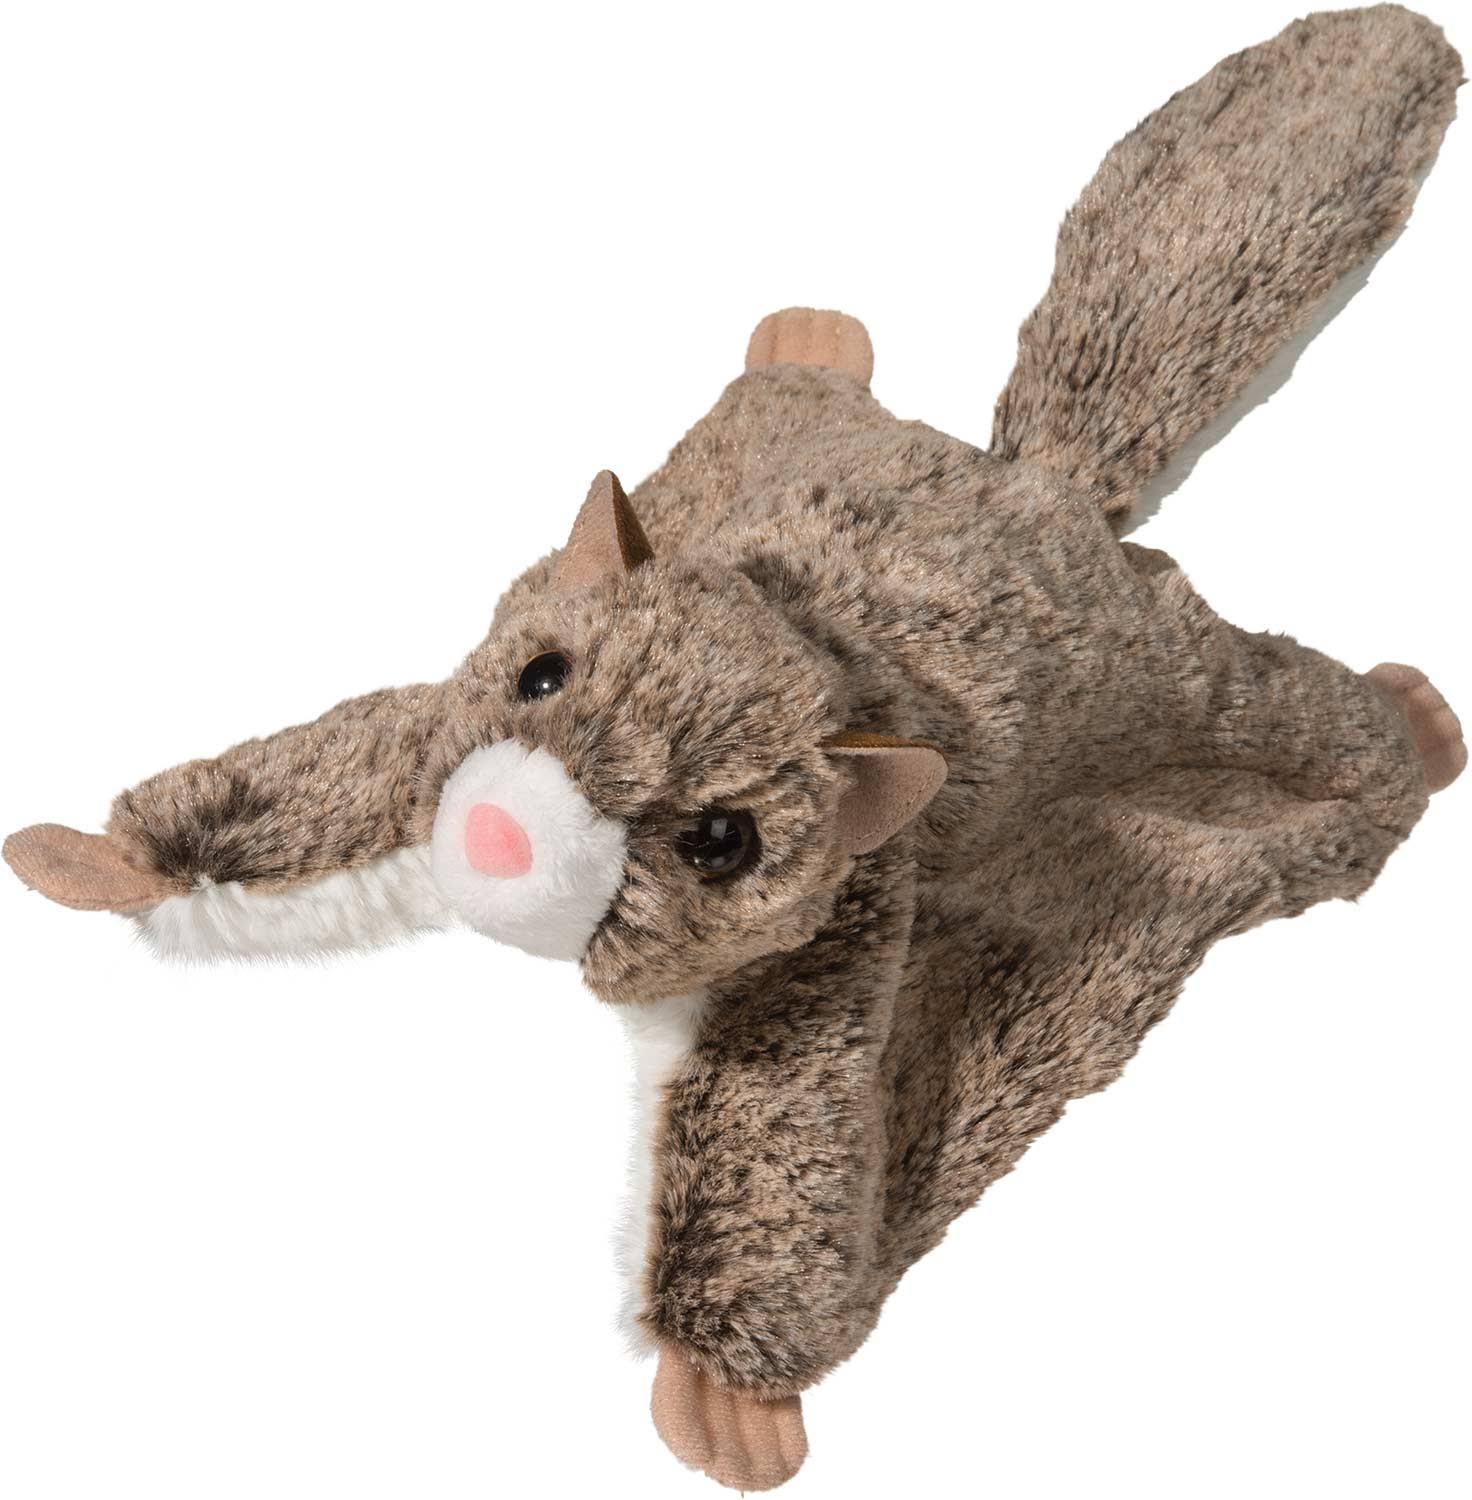 Douglas Cuddle Toys Stuffed Animal - Squirrel, 10"